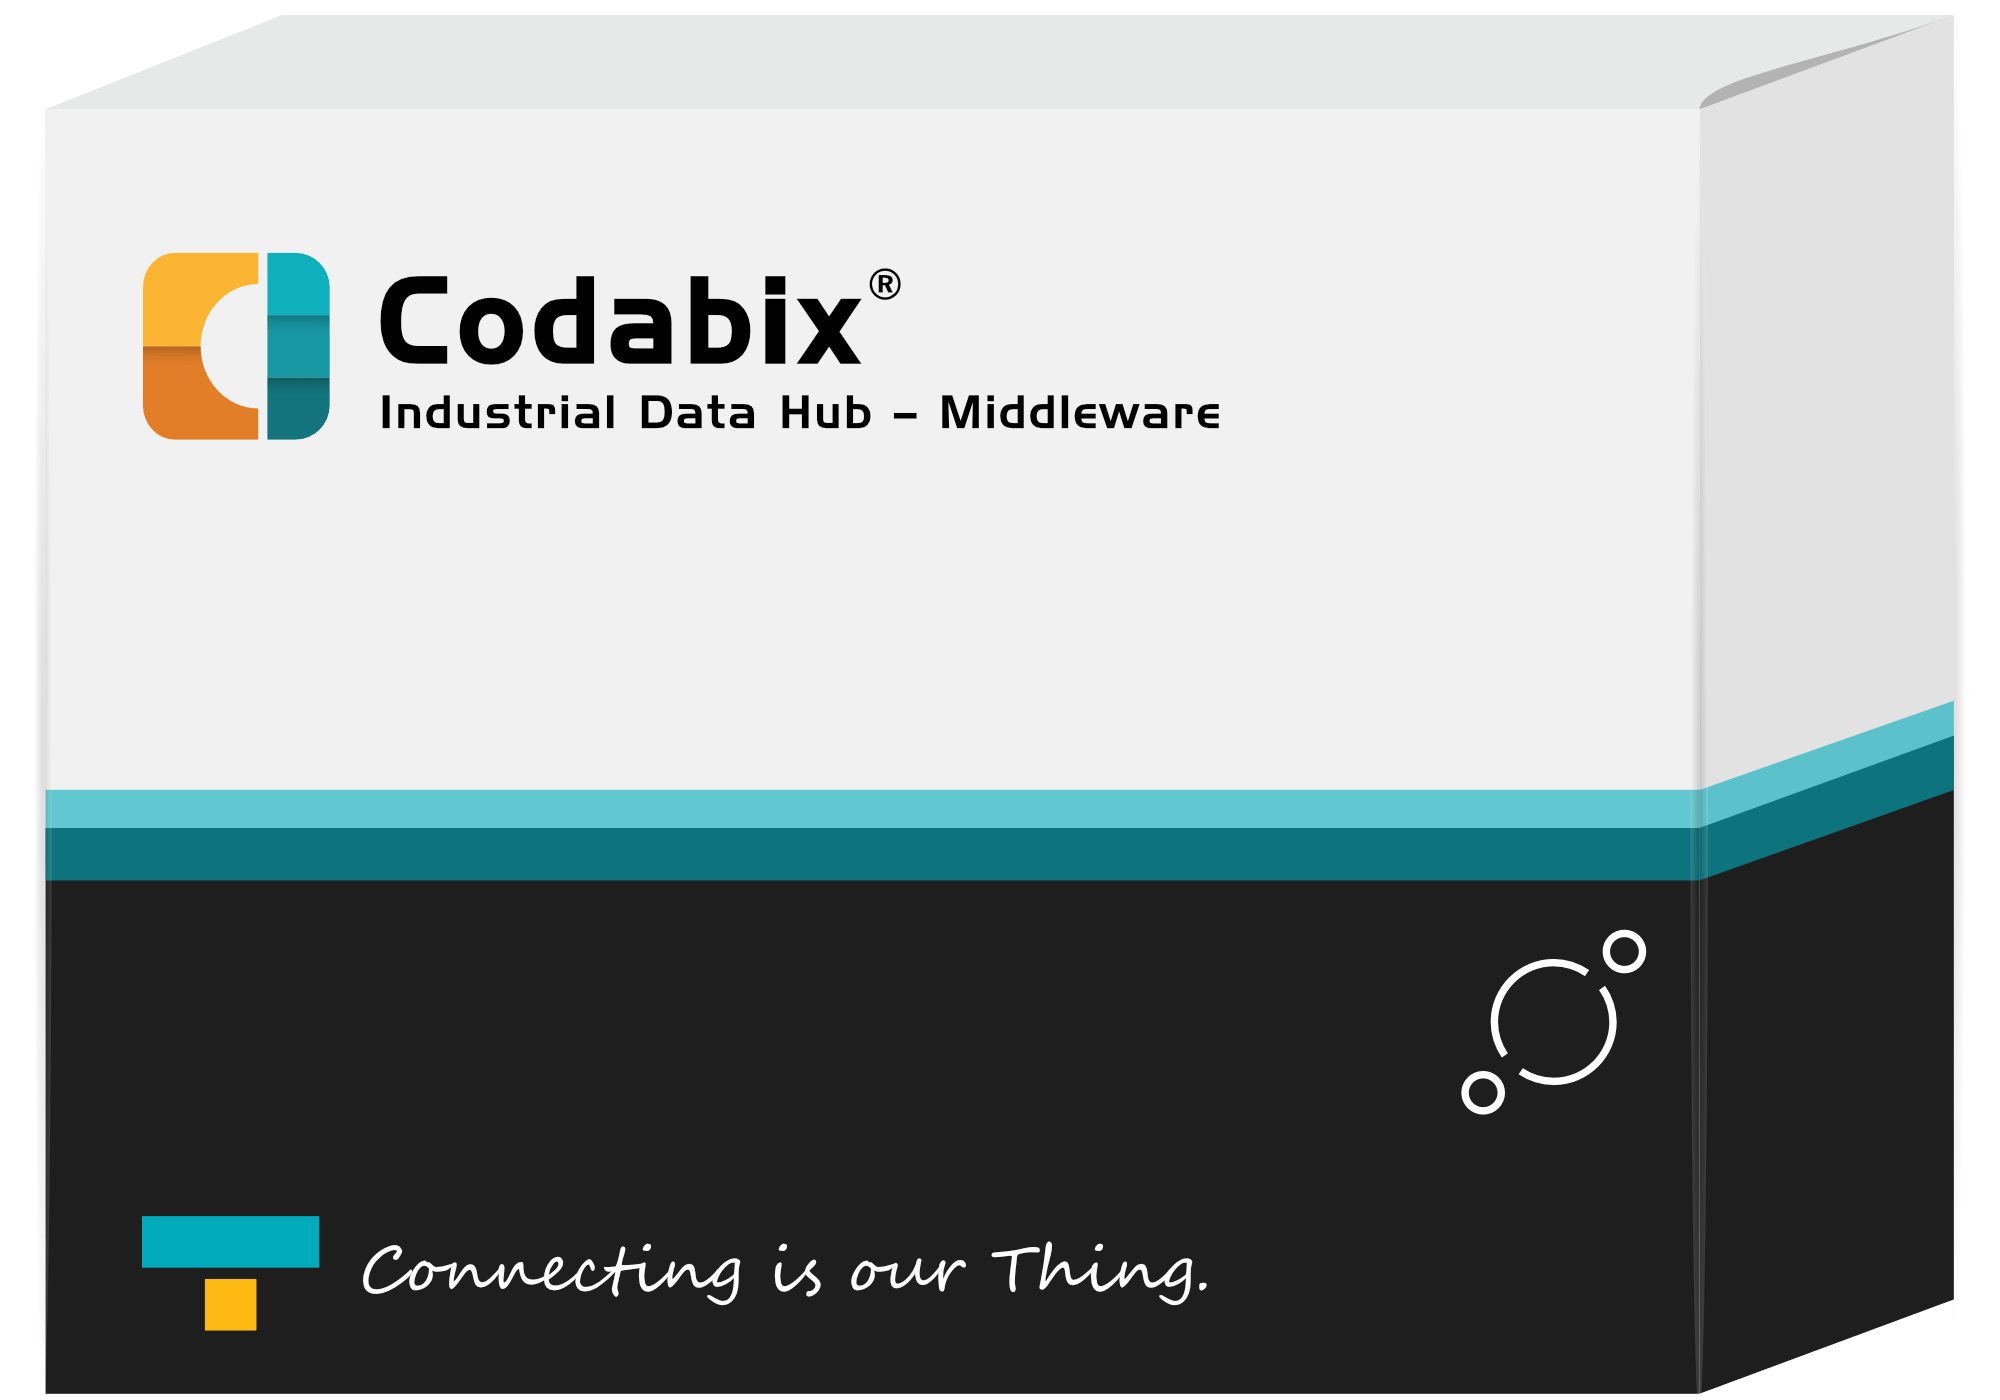 Icon for "Codabix Industrial Data Hub".